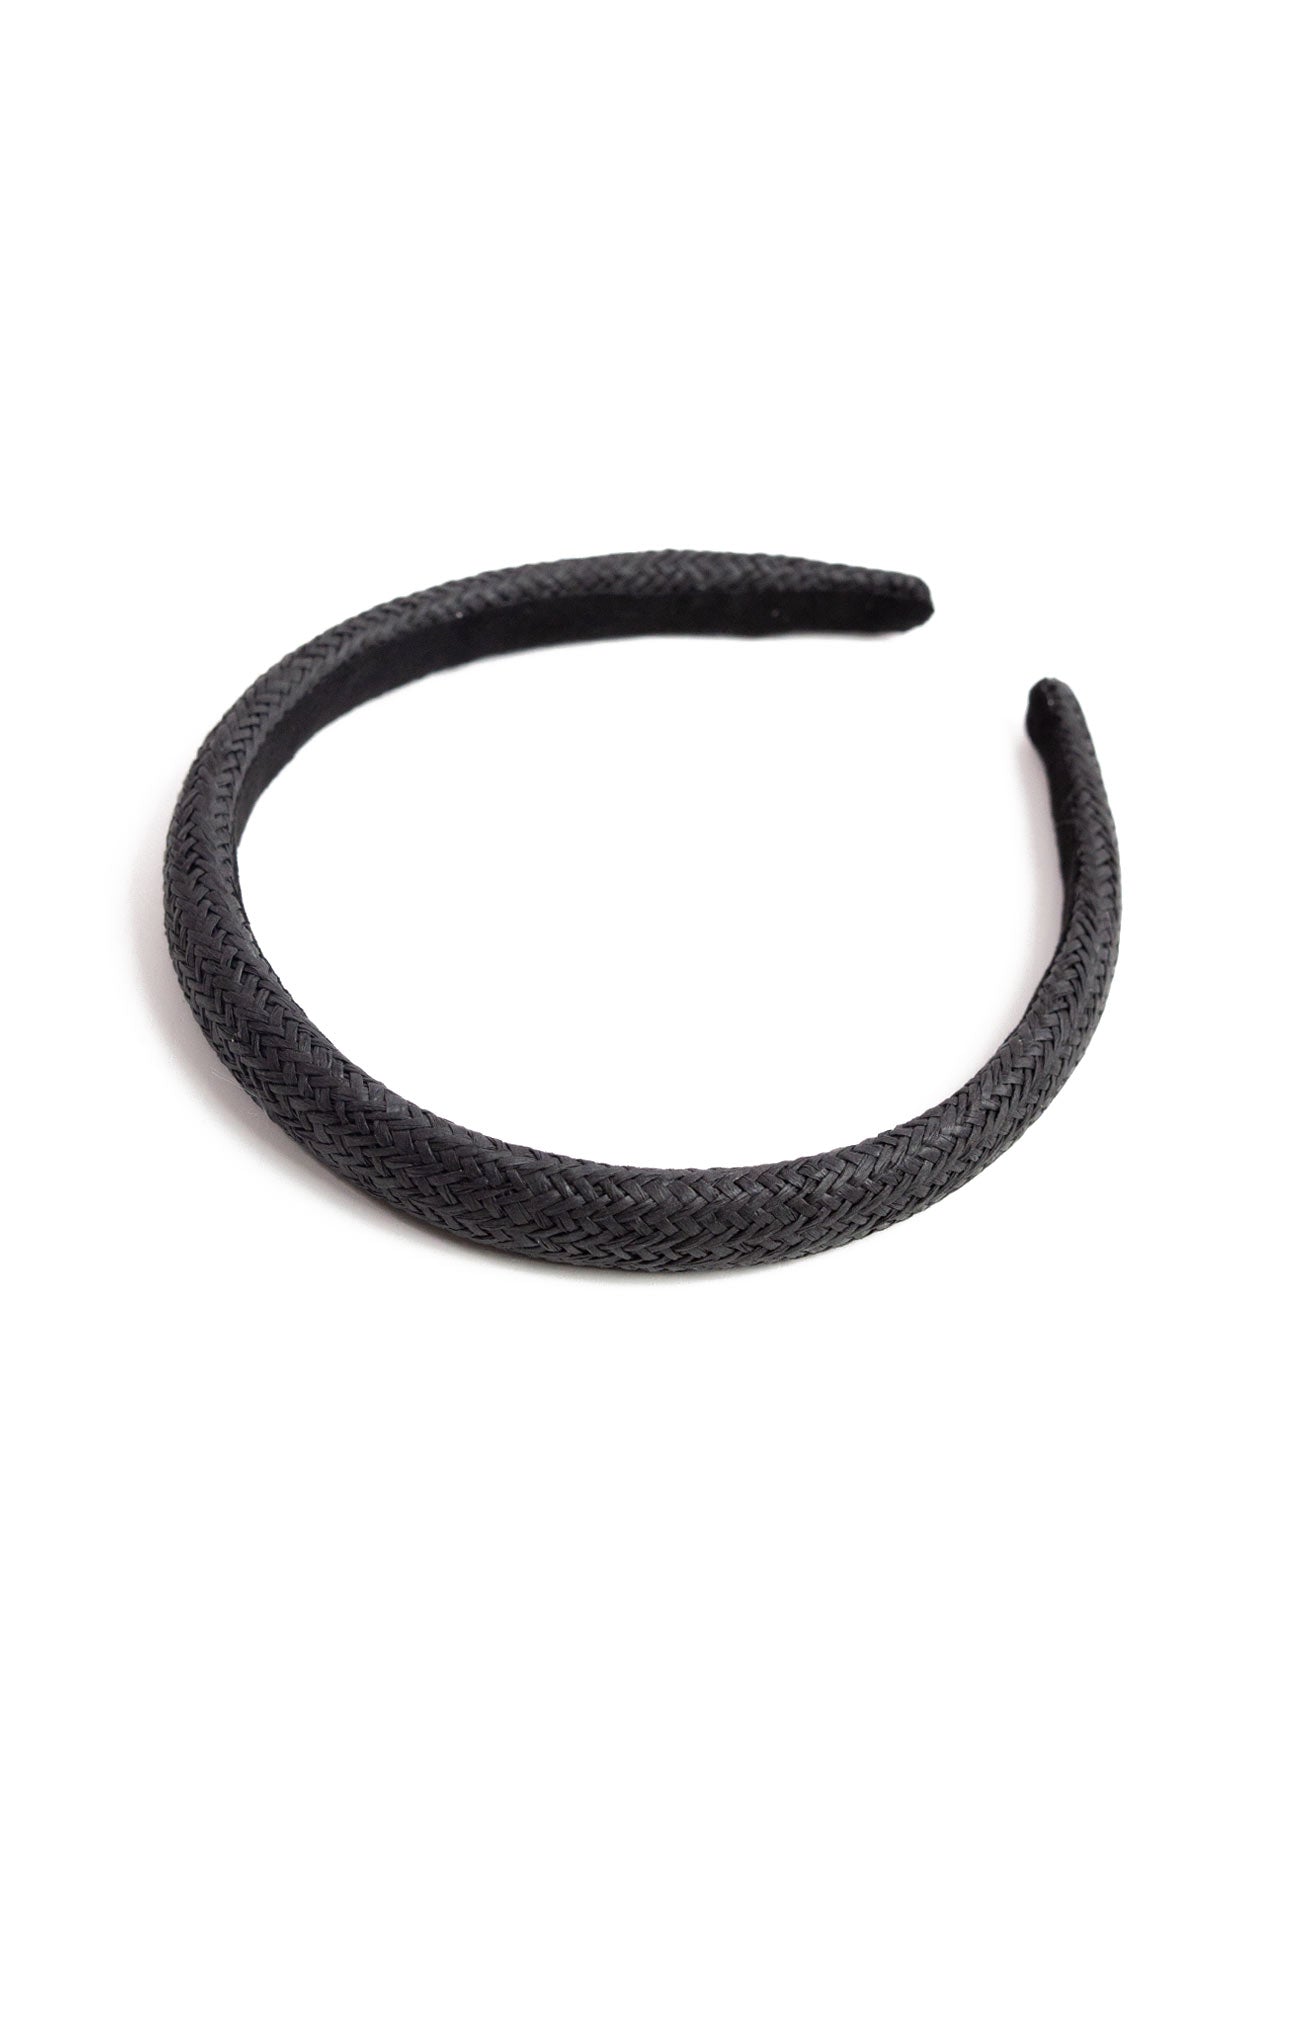 Rattan Headband Black - shopatgrace.com